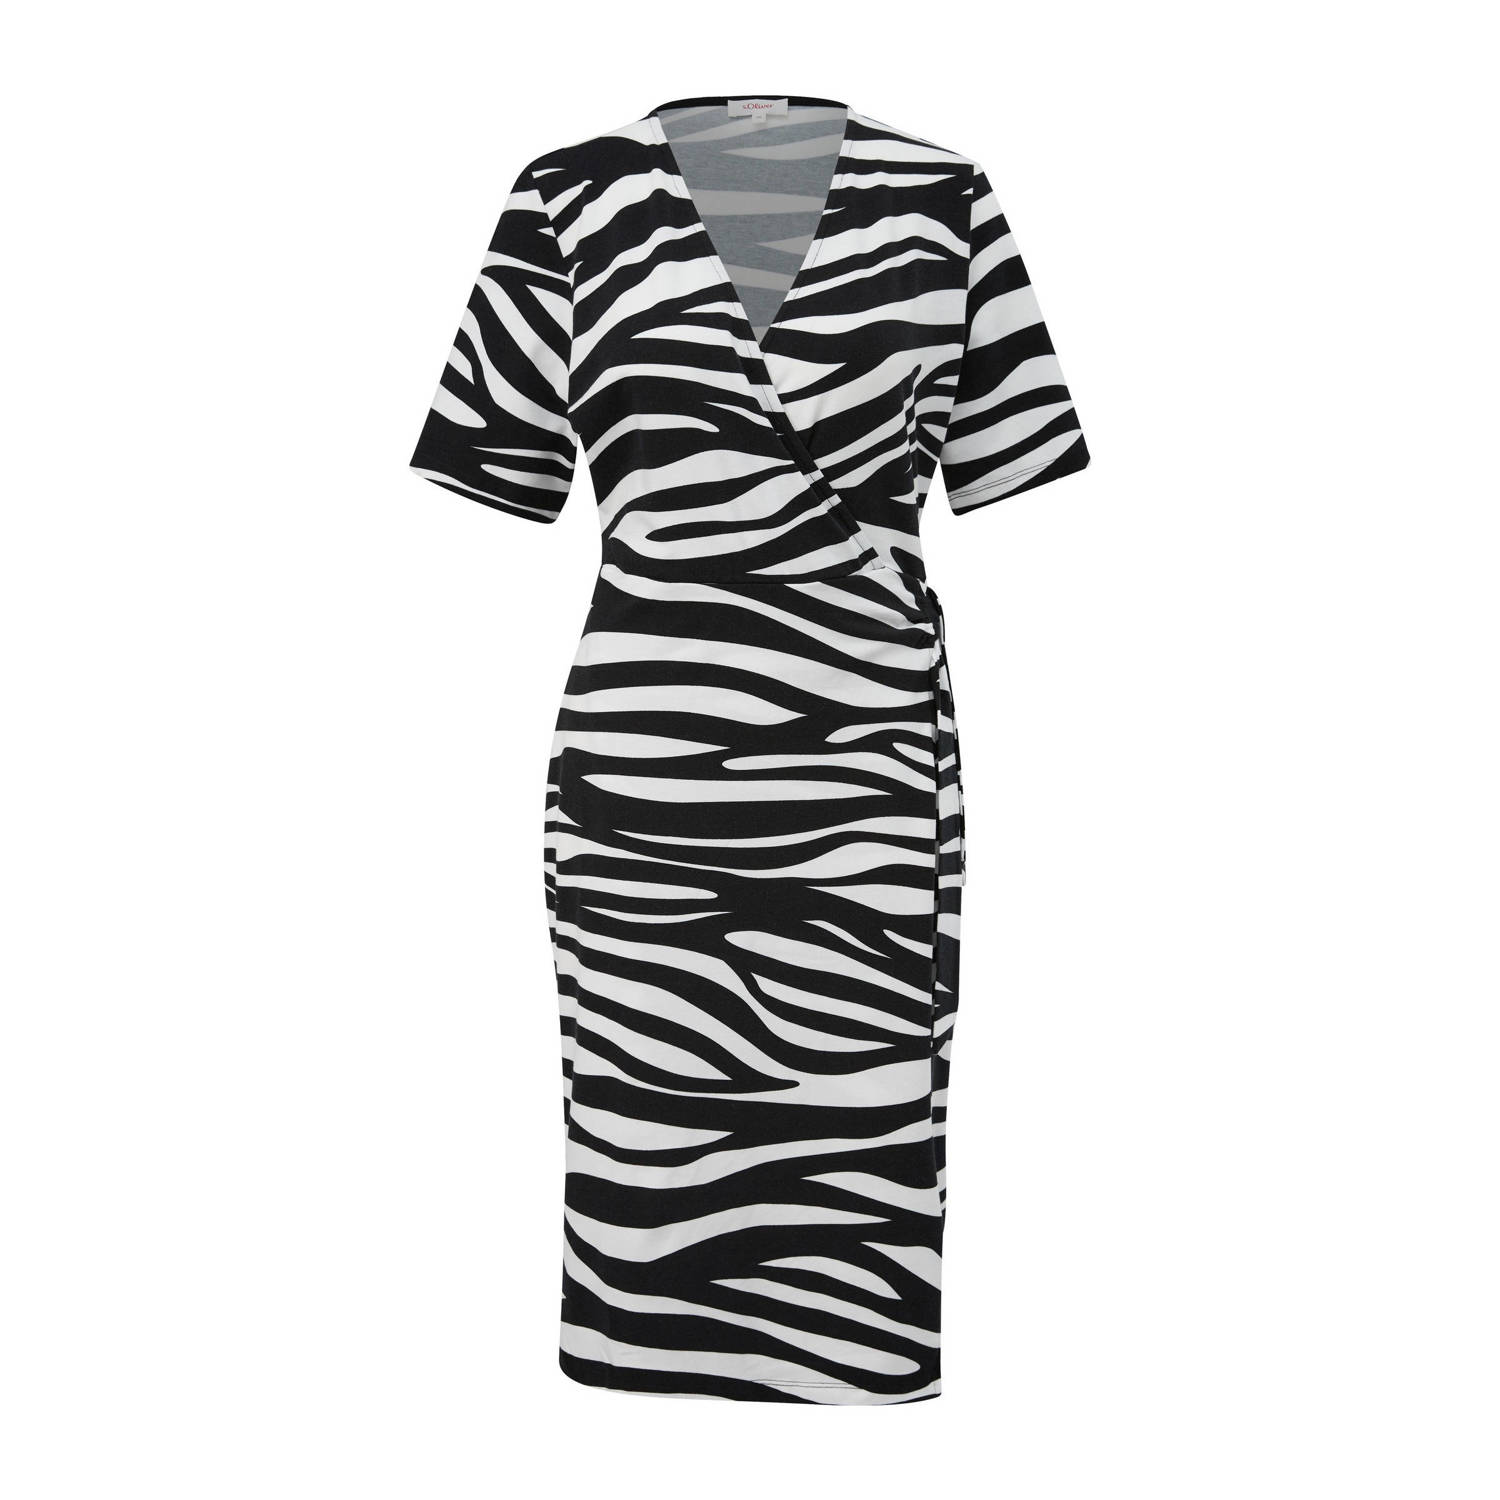 S.Oliver jurk met zebraprint zwart wit